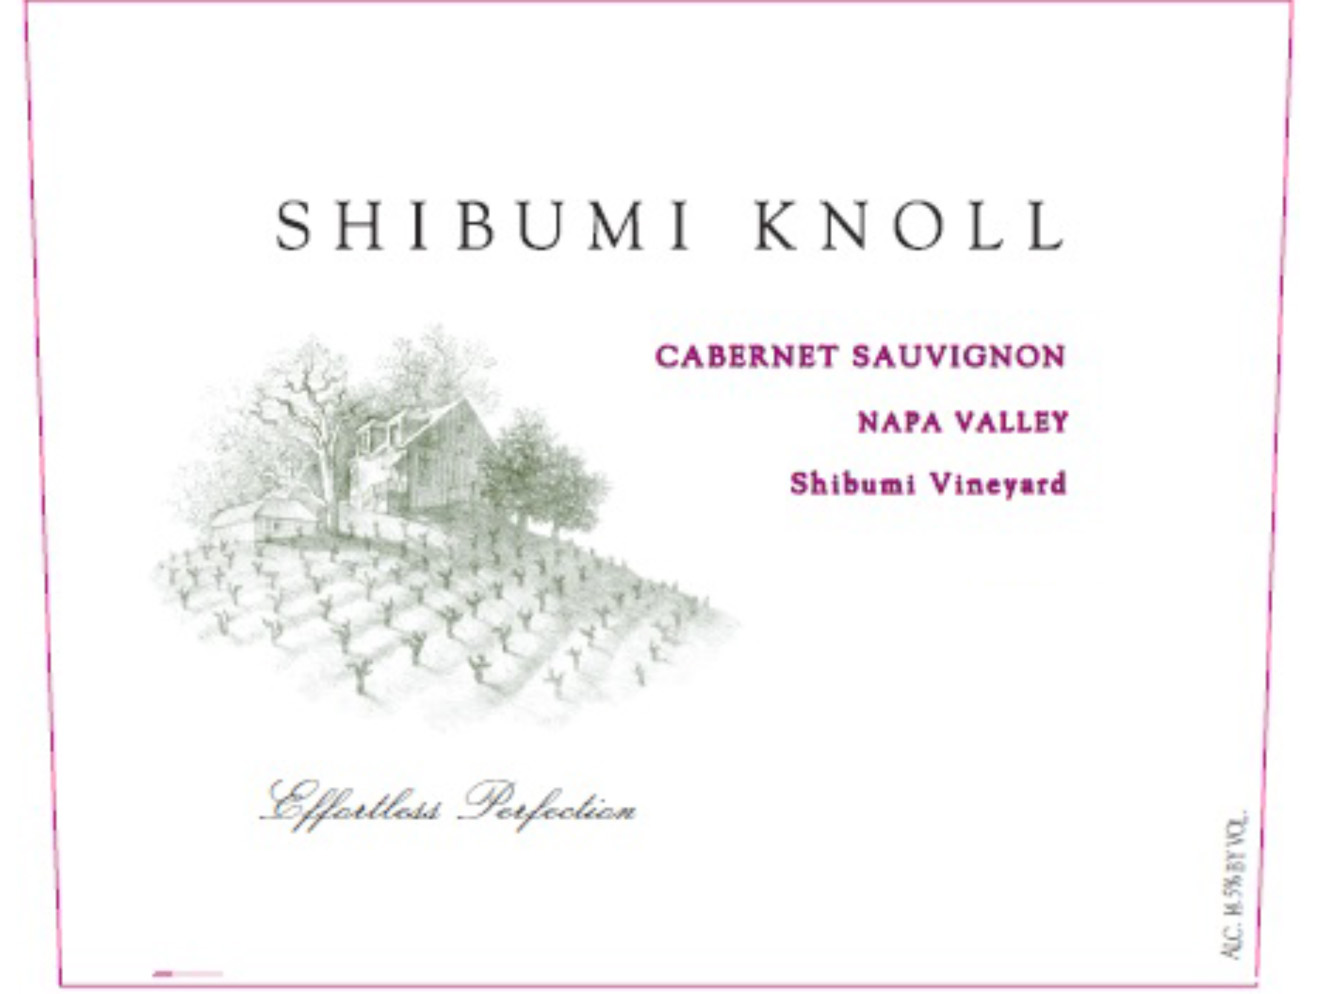 Shibumi Knoll - Cabernet Sauvignon label